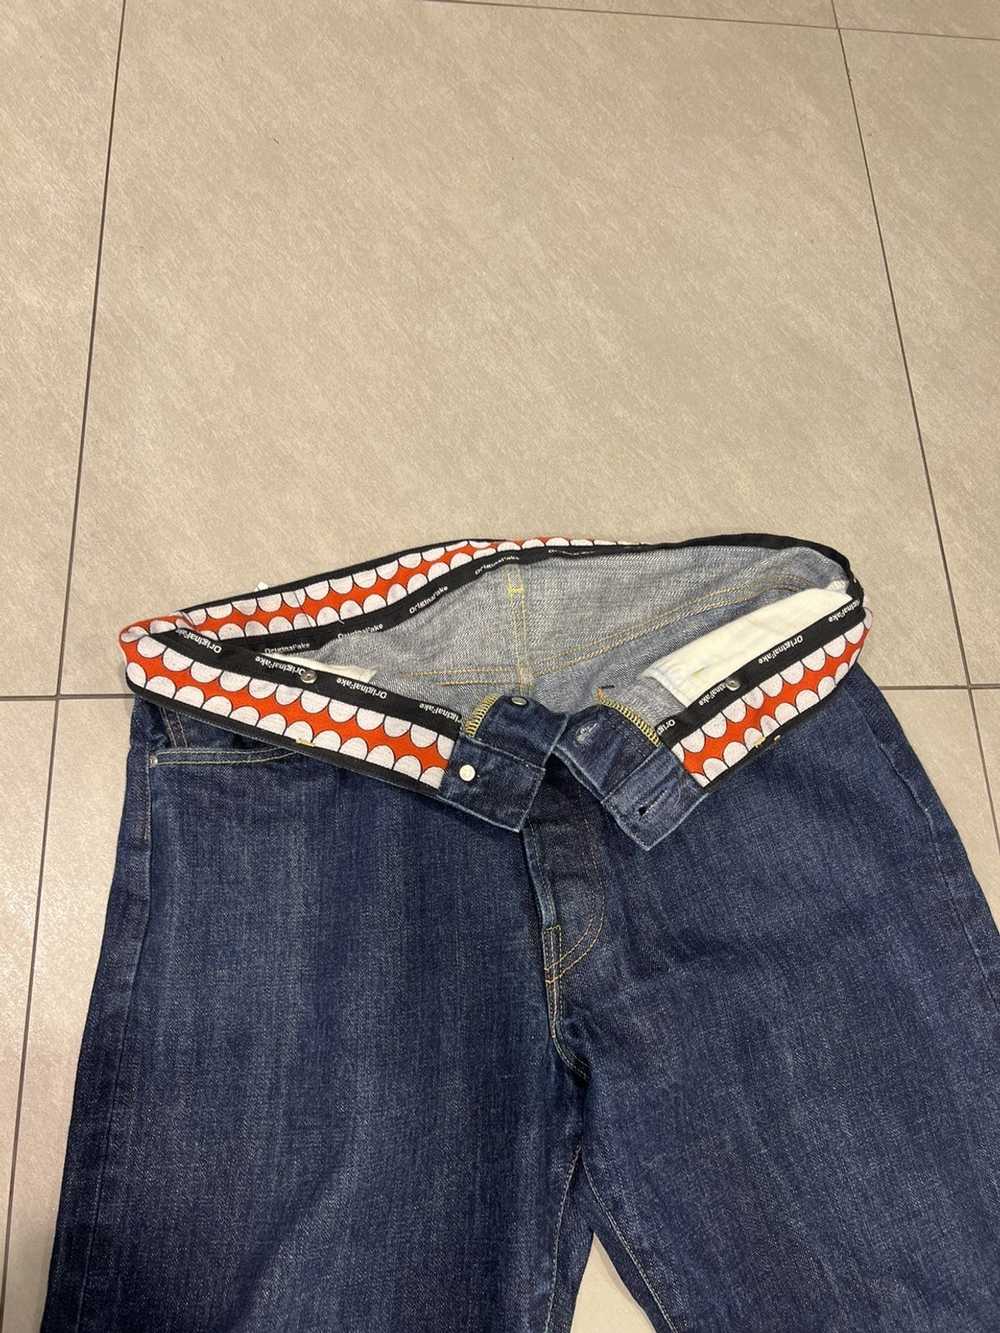 Kaws KAWS “Original Fake” Denim Jeans - image 3